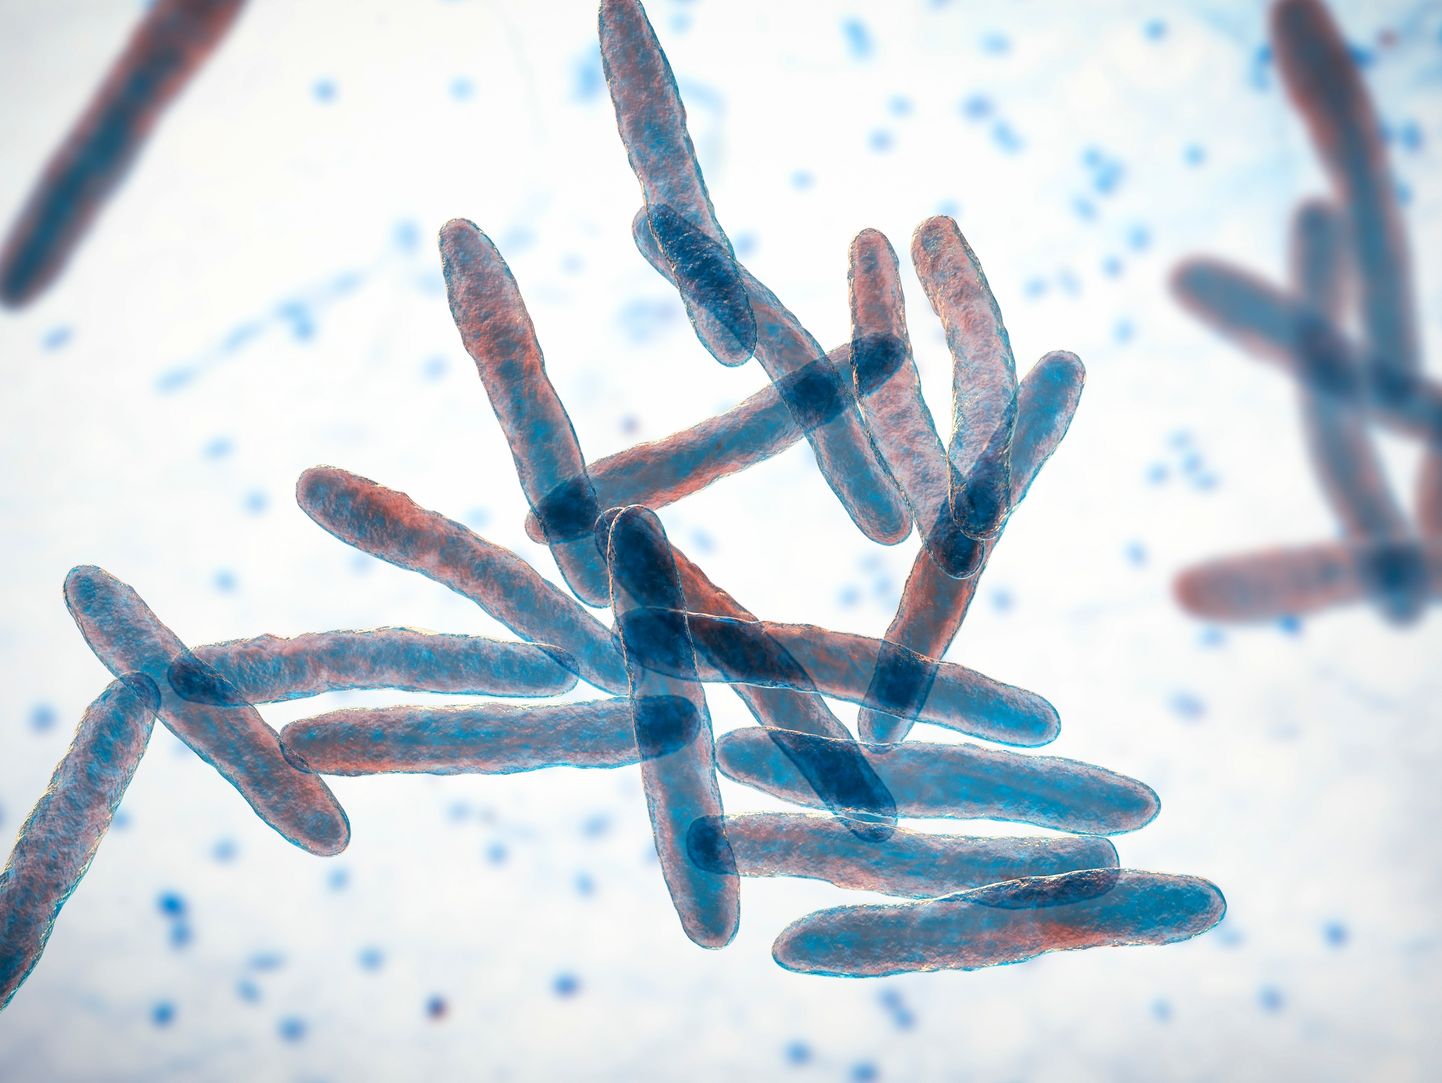 Buruli haavandit põhjustab bakter Mycobacterium ulcerans.